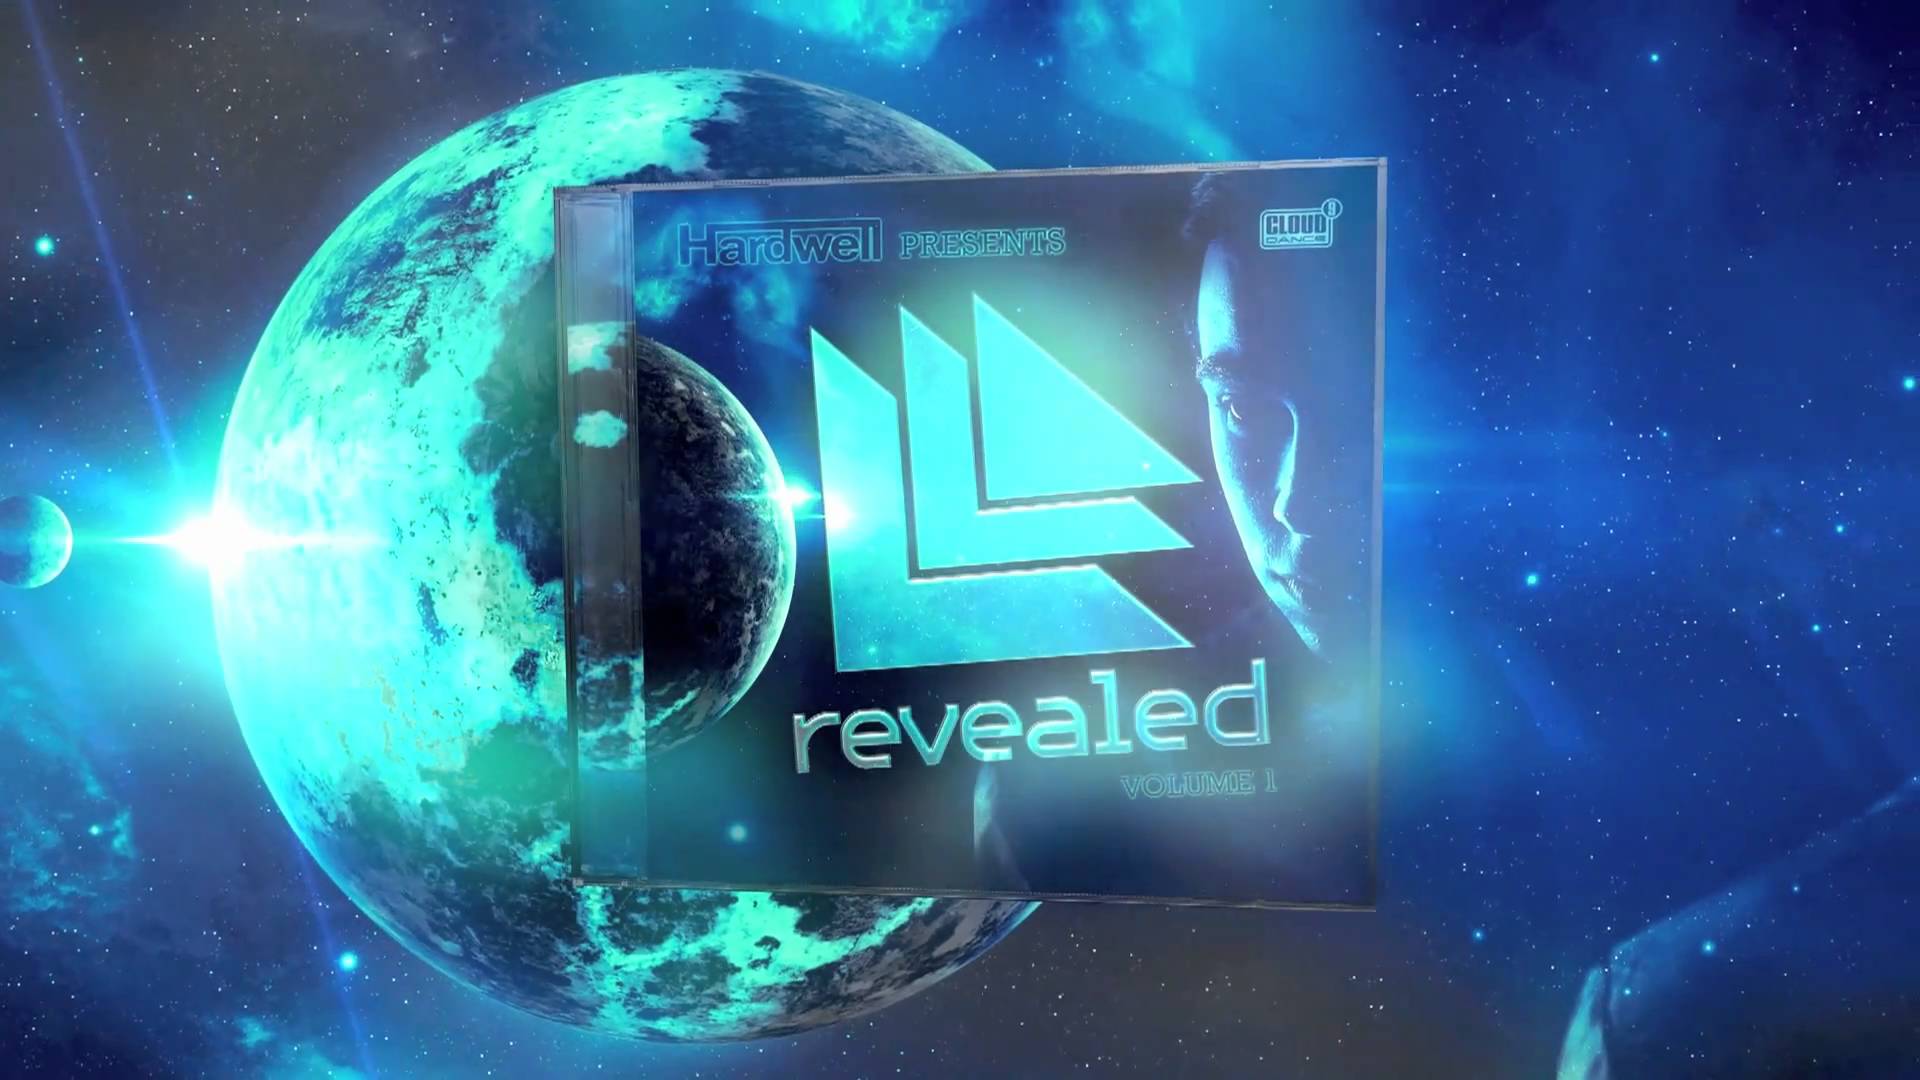 Hardwell presents Revealed Volume 1 (Official CD Teaser)